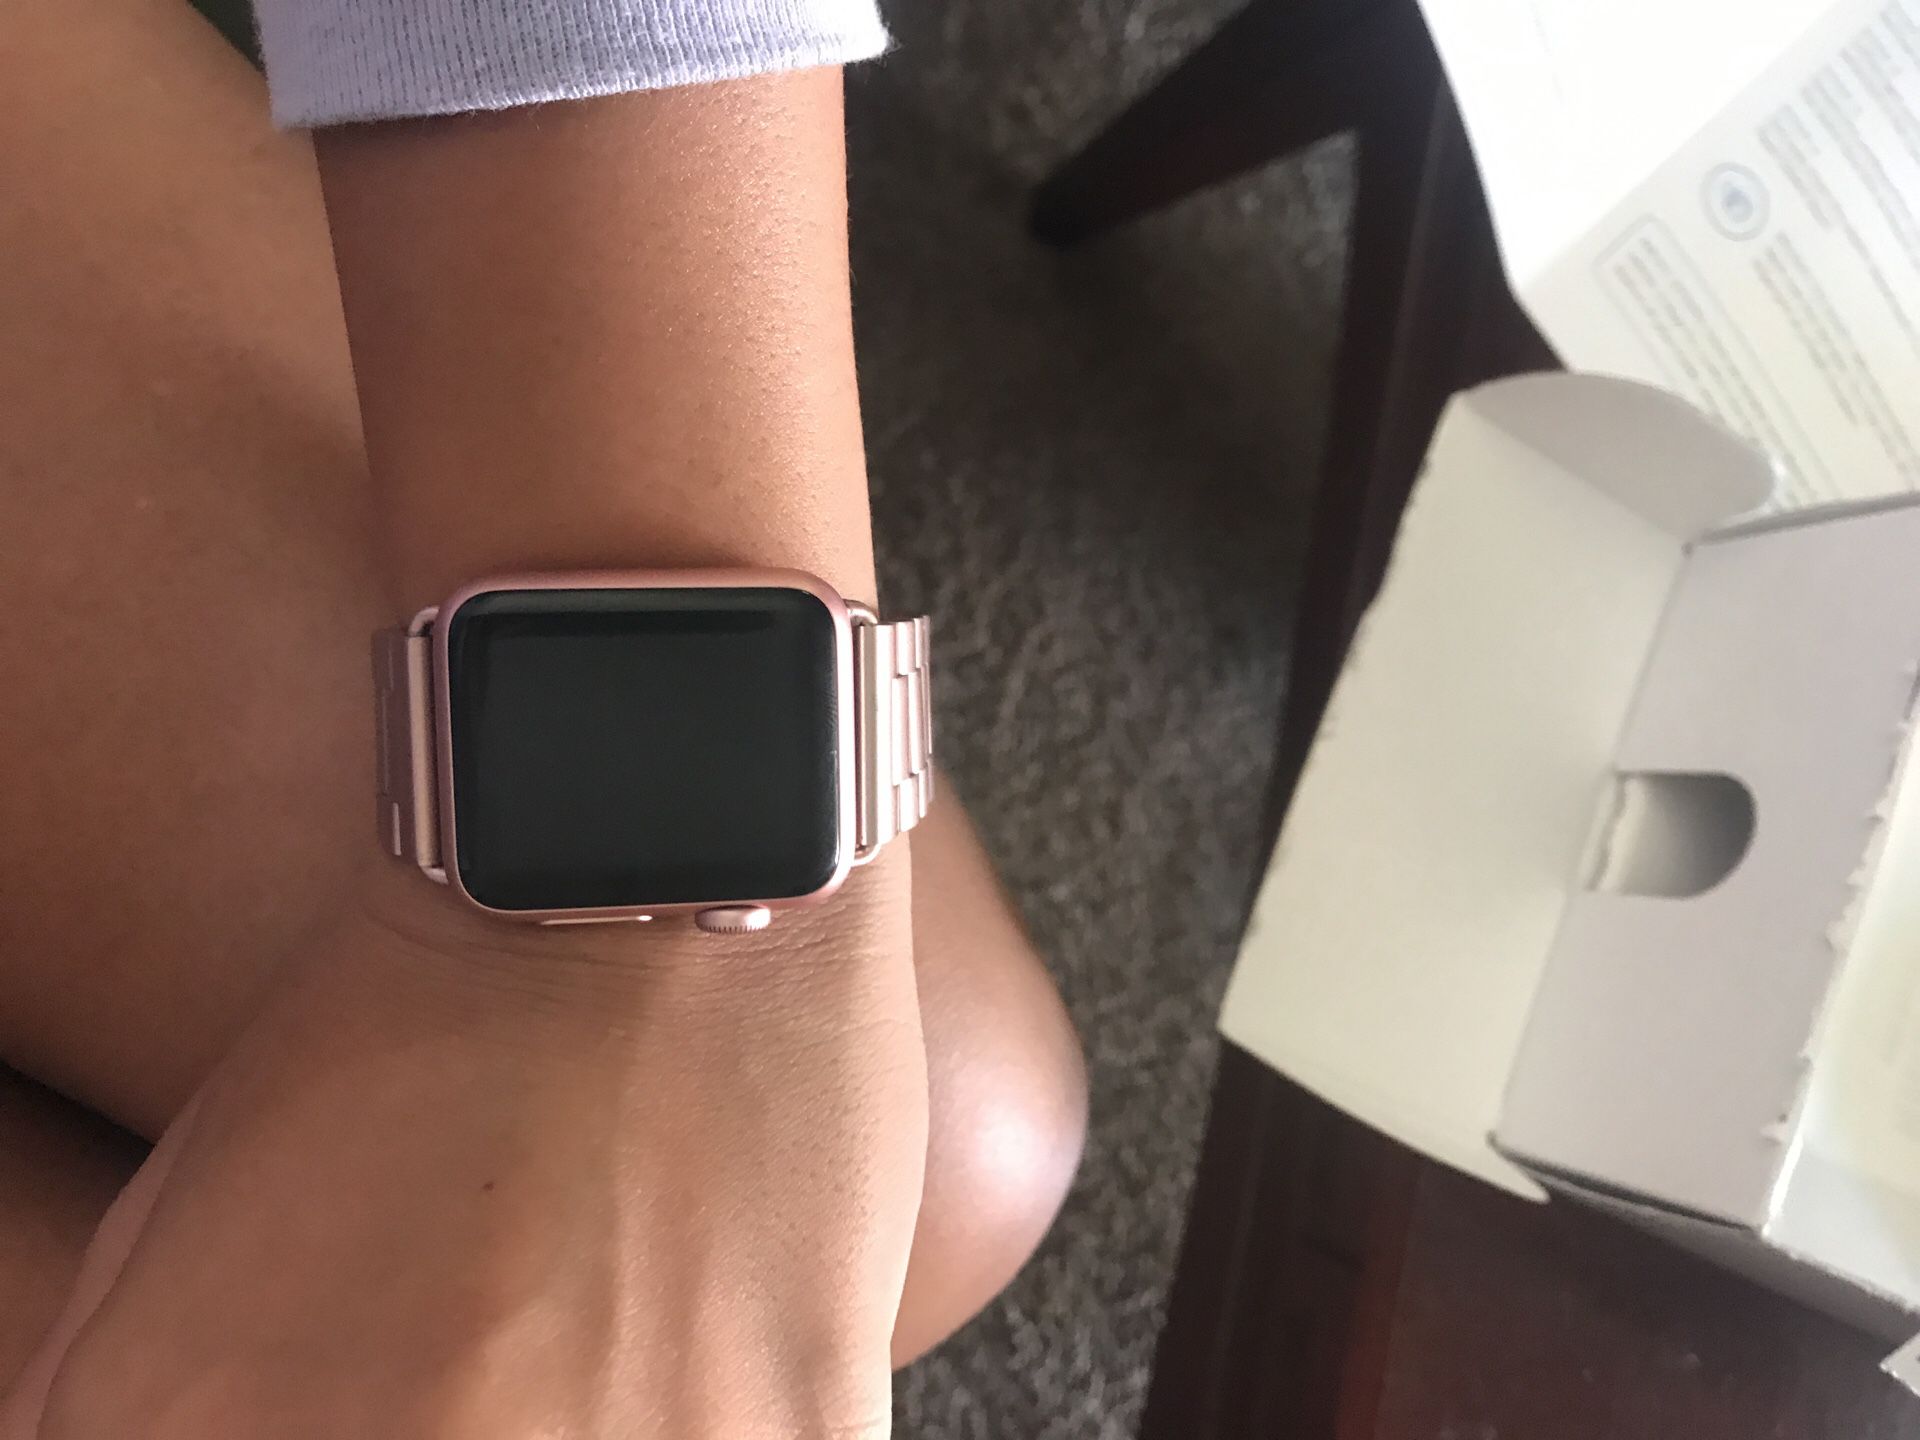 First gen Apple Watch.